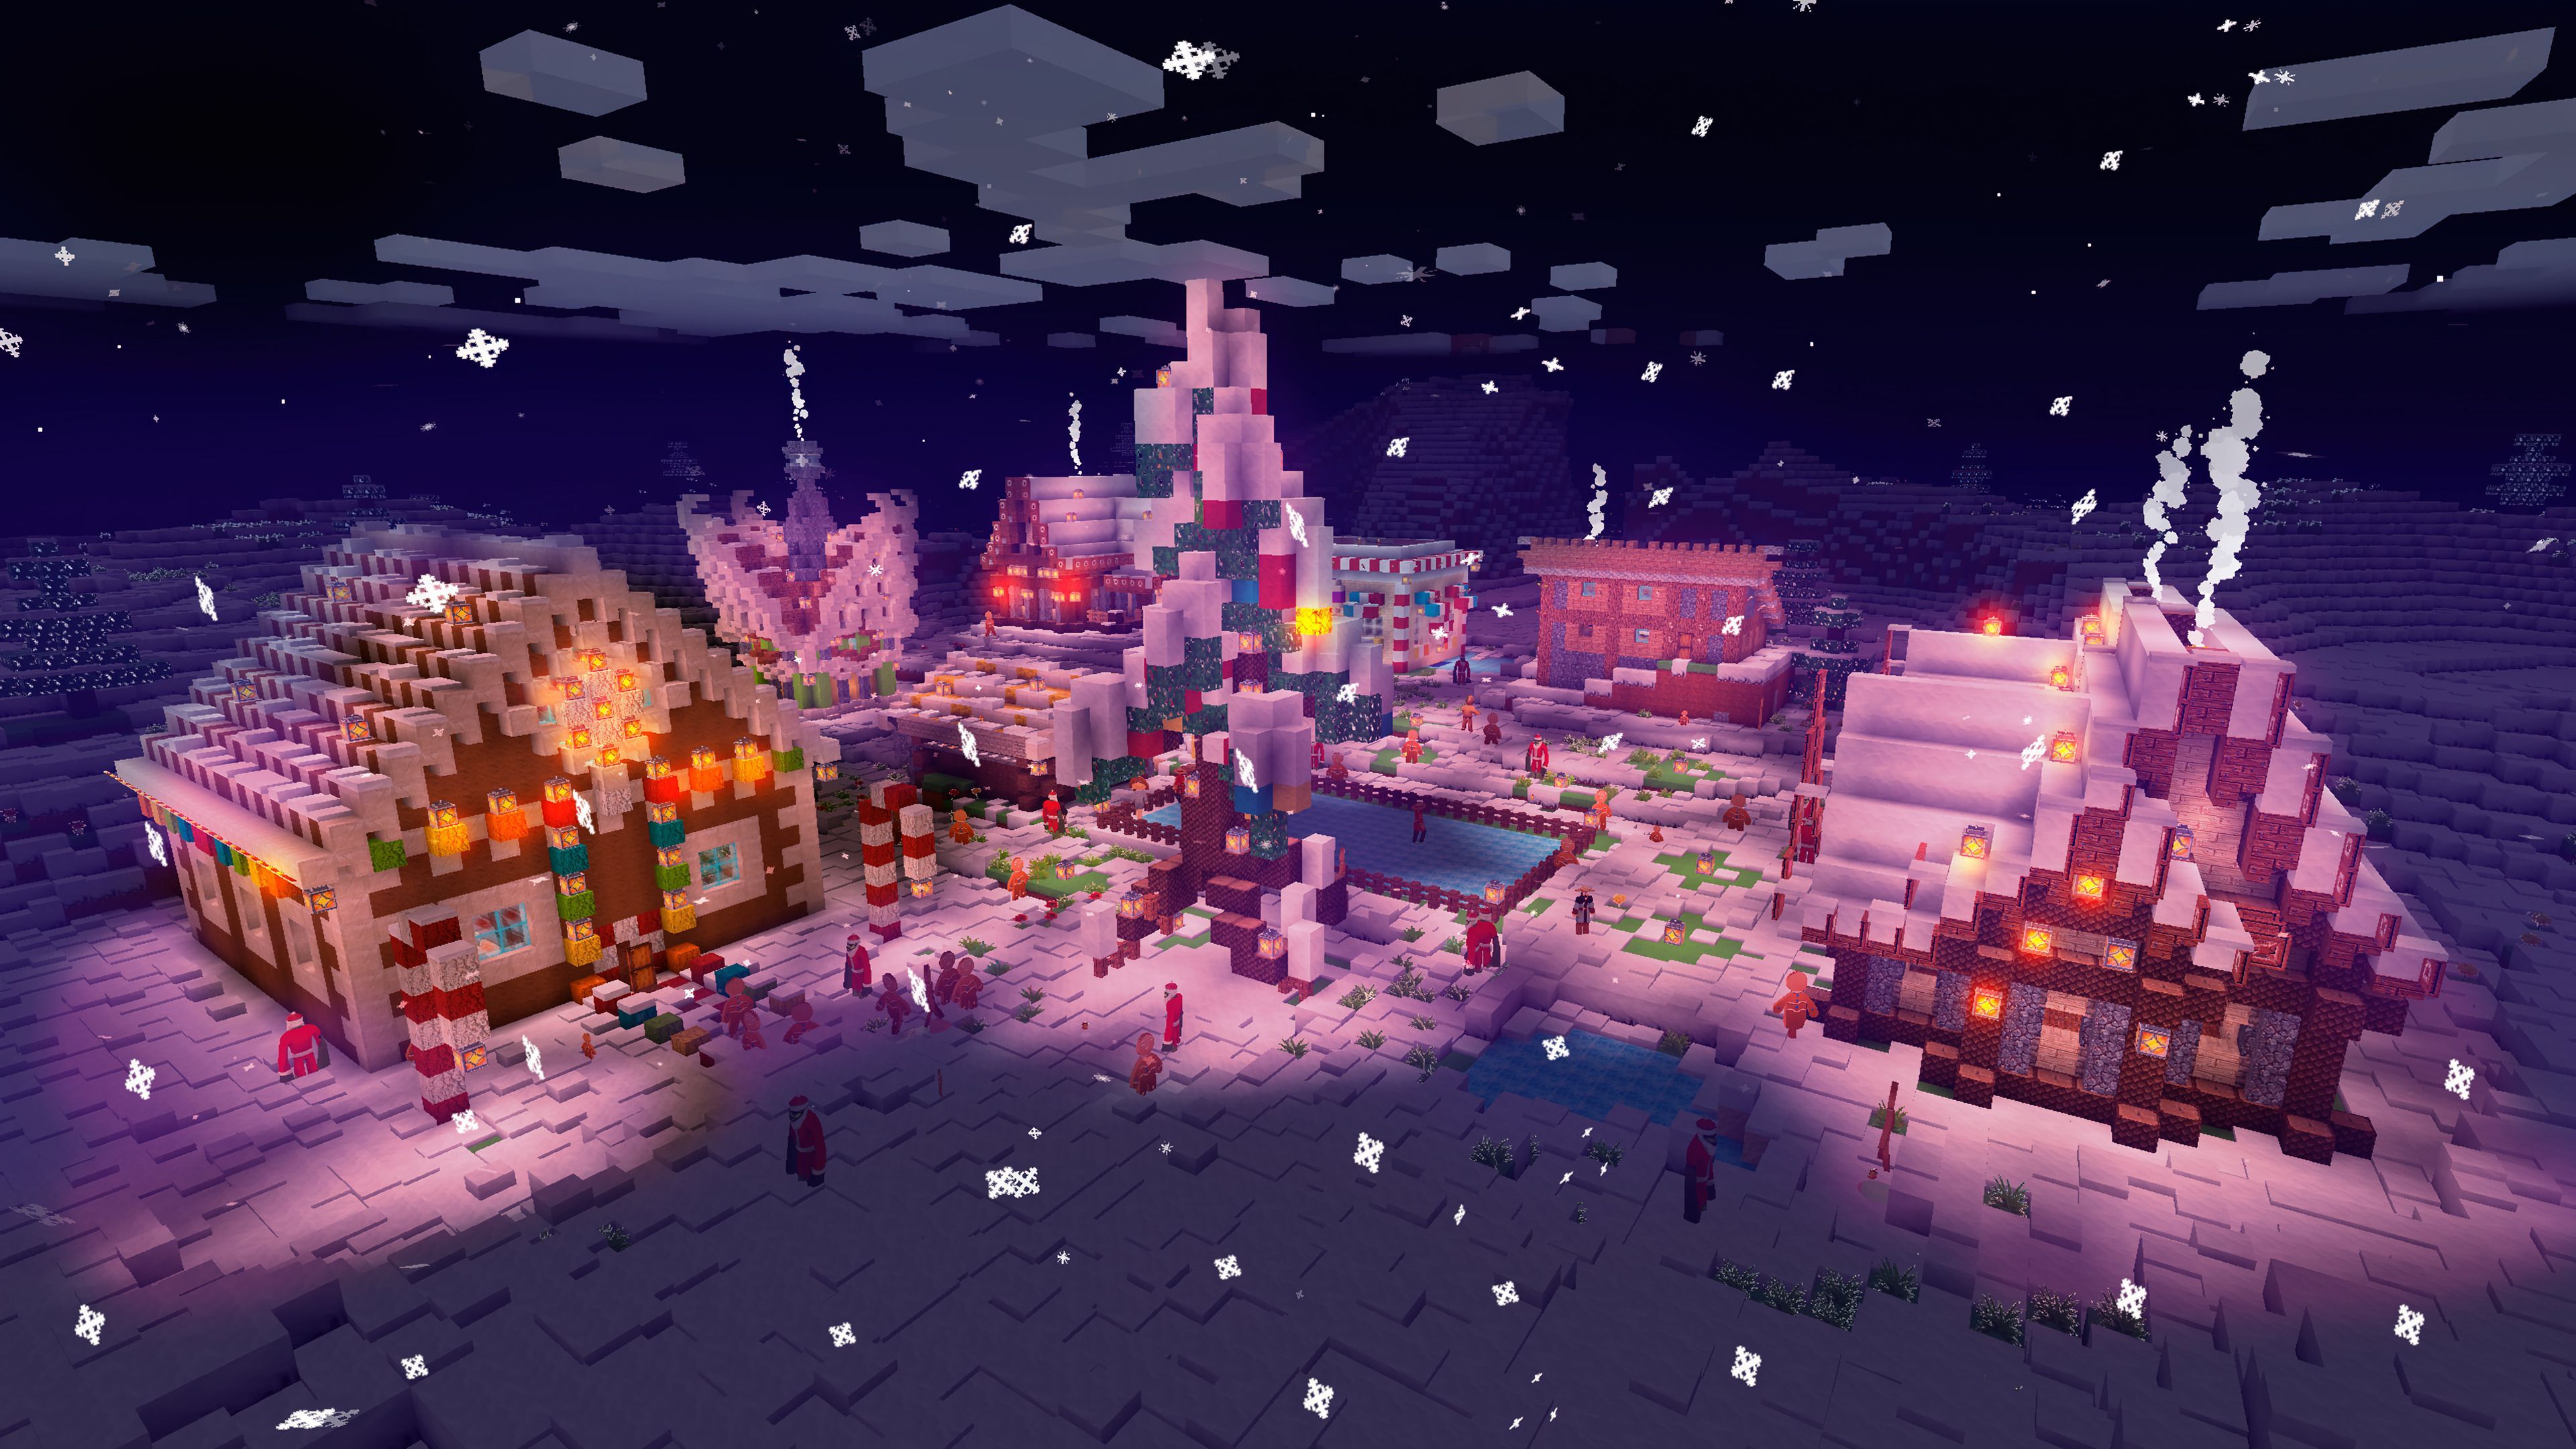 Minecraft's Christmas update adds a festive village - Minecraft